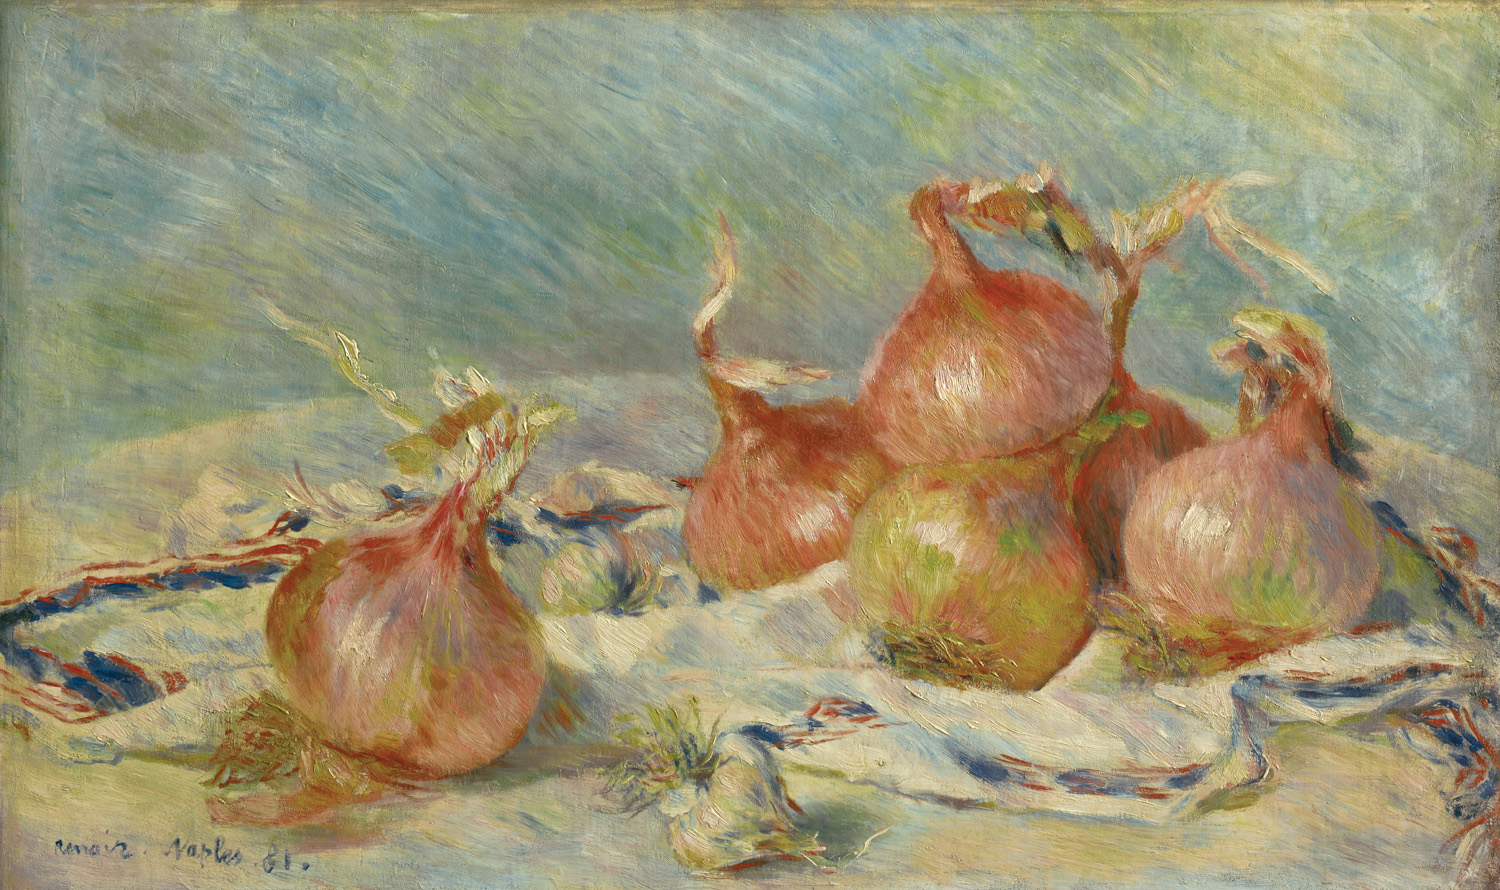 洋蔥 by Pierre-Auguste Renoir - 1881 - 39.1 x 60.6 cm 